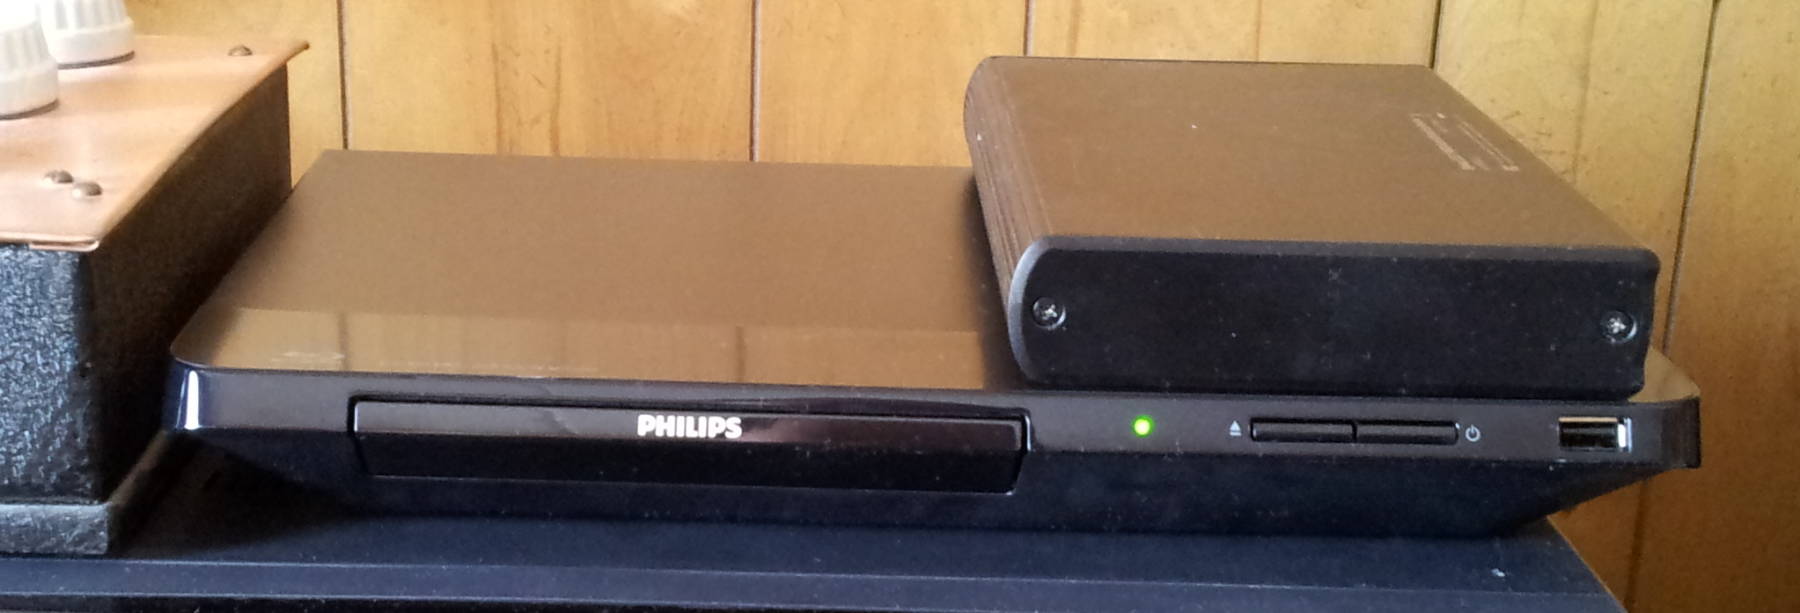 Philips Blu-ray player running Linux.